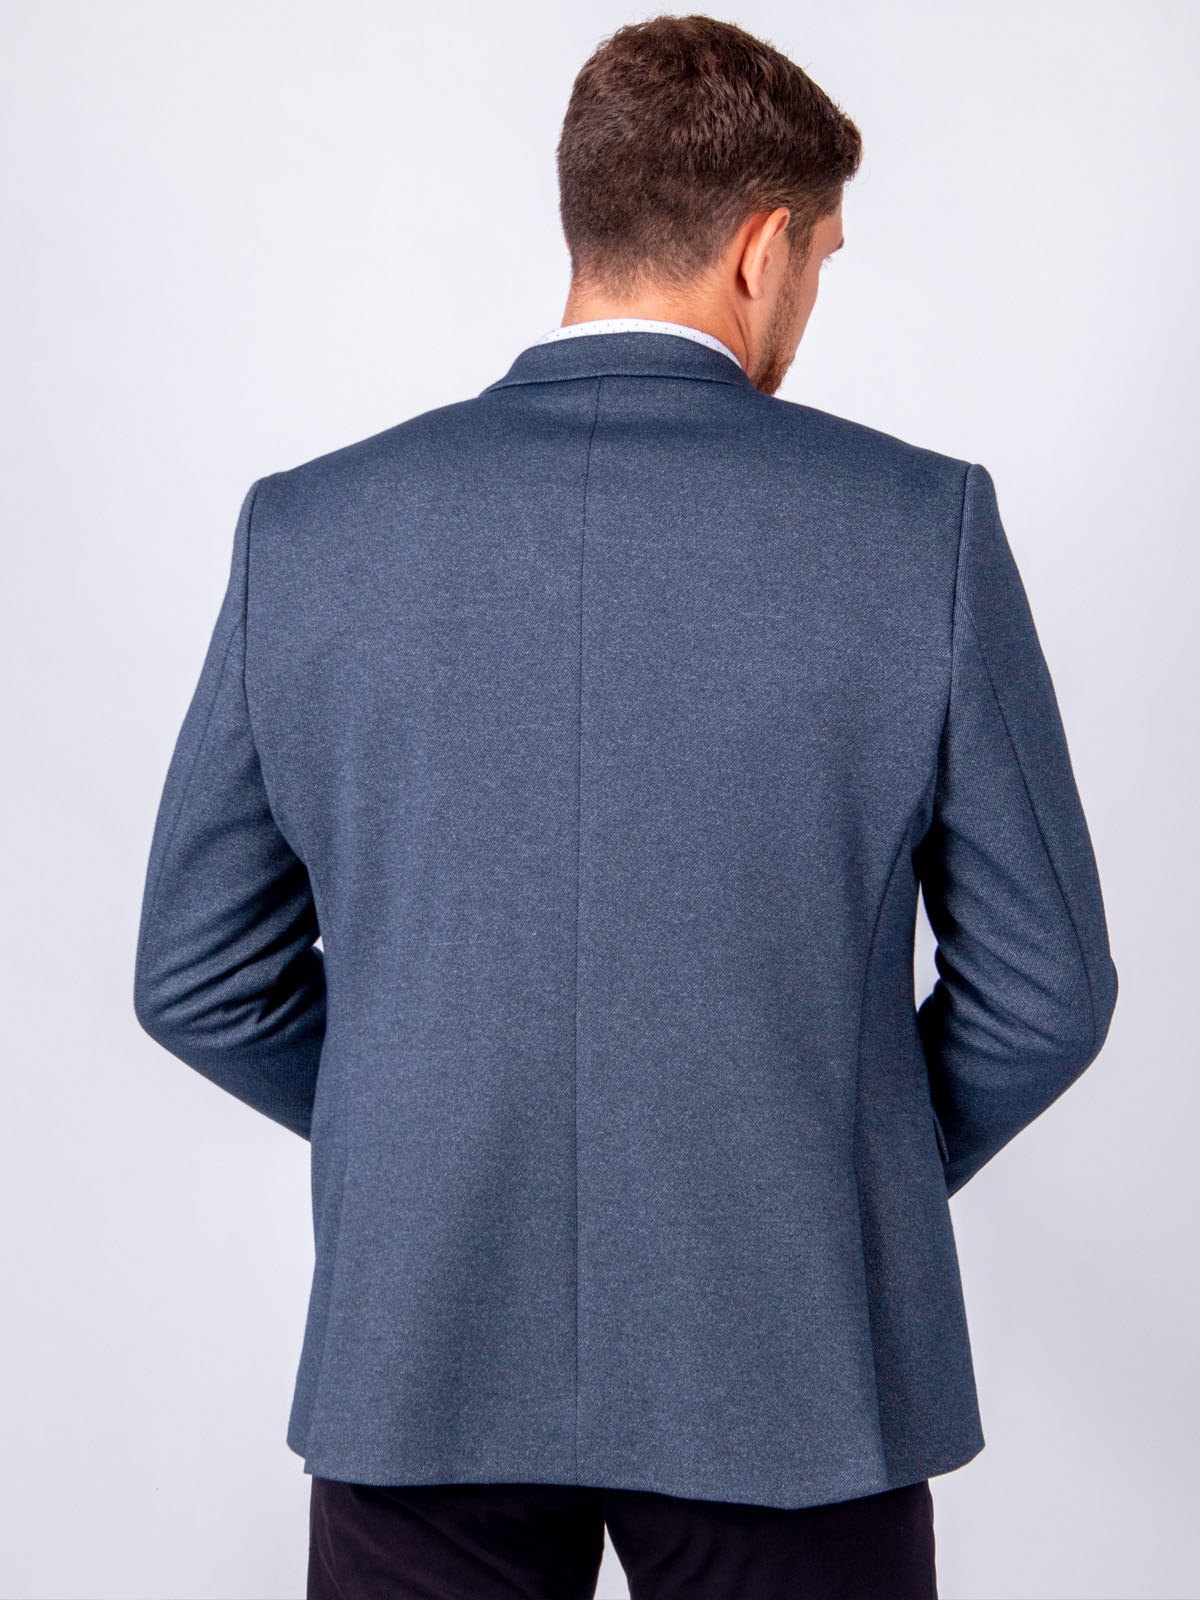 Fitted jacket in medium blue melange - 61081 € 72.55 img3